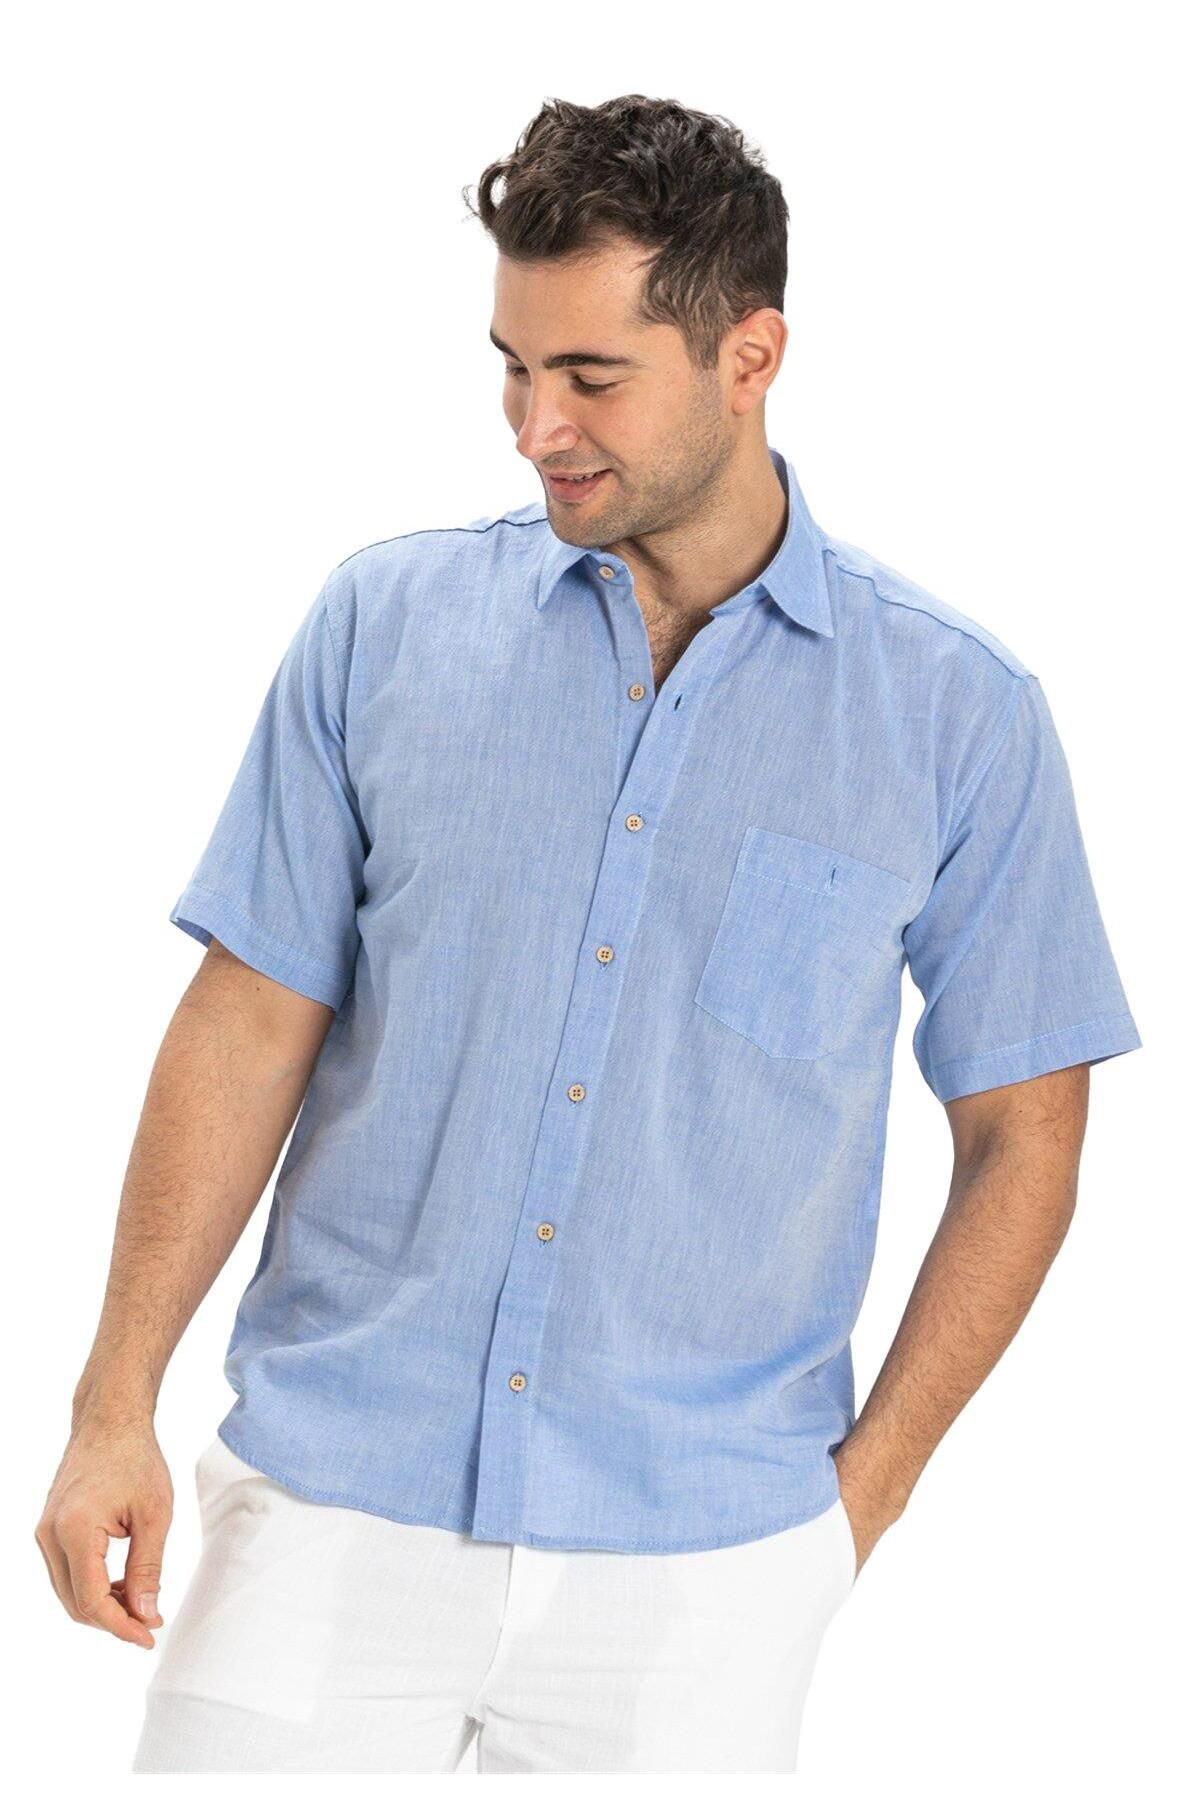 Eliş Şile Bezi پیراهن آستین کوتاه شیله پارچه ای تک جیبی مردانه آبی 3032 سایز بزرگ